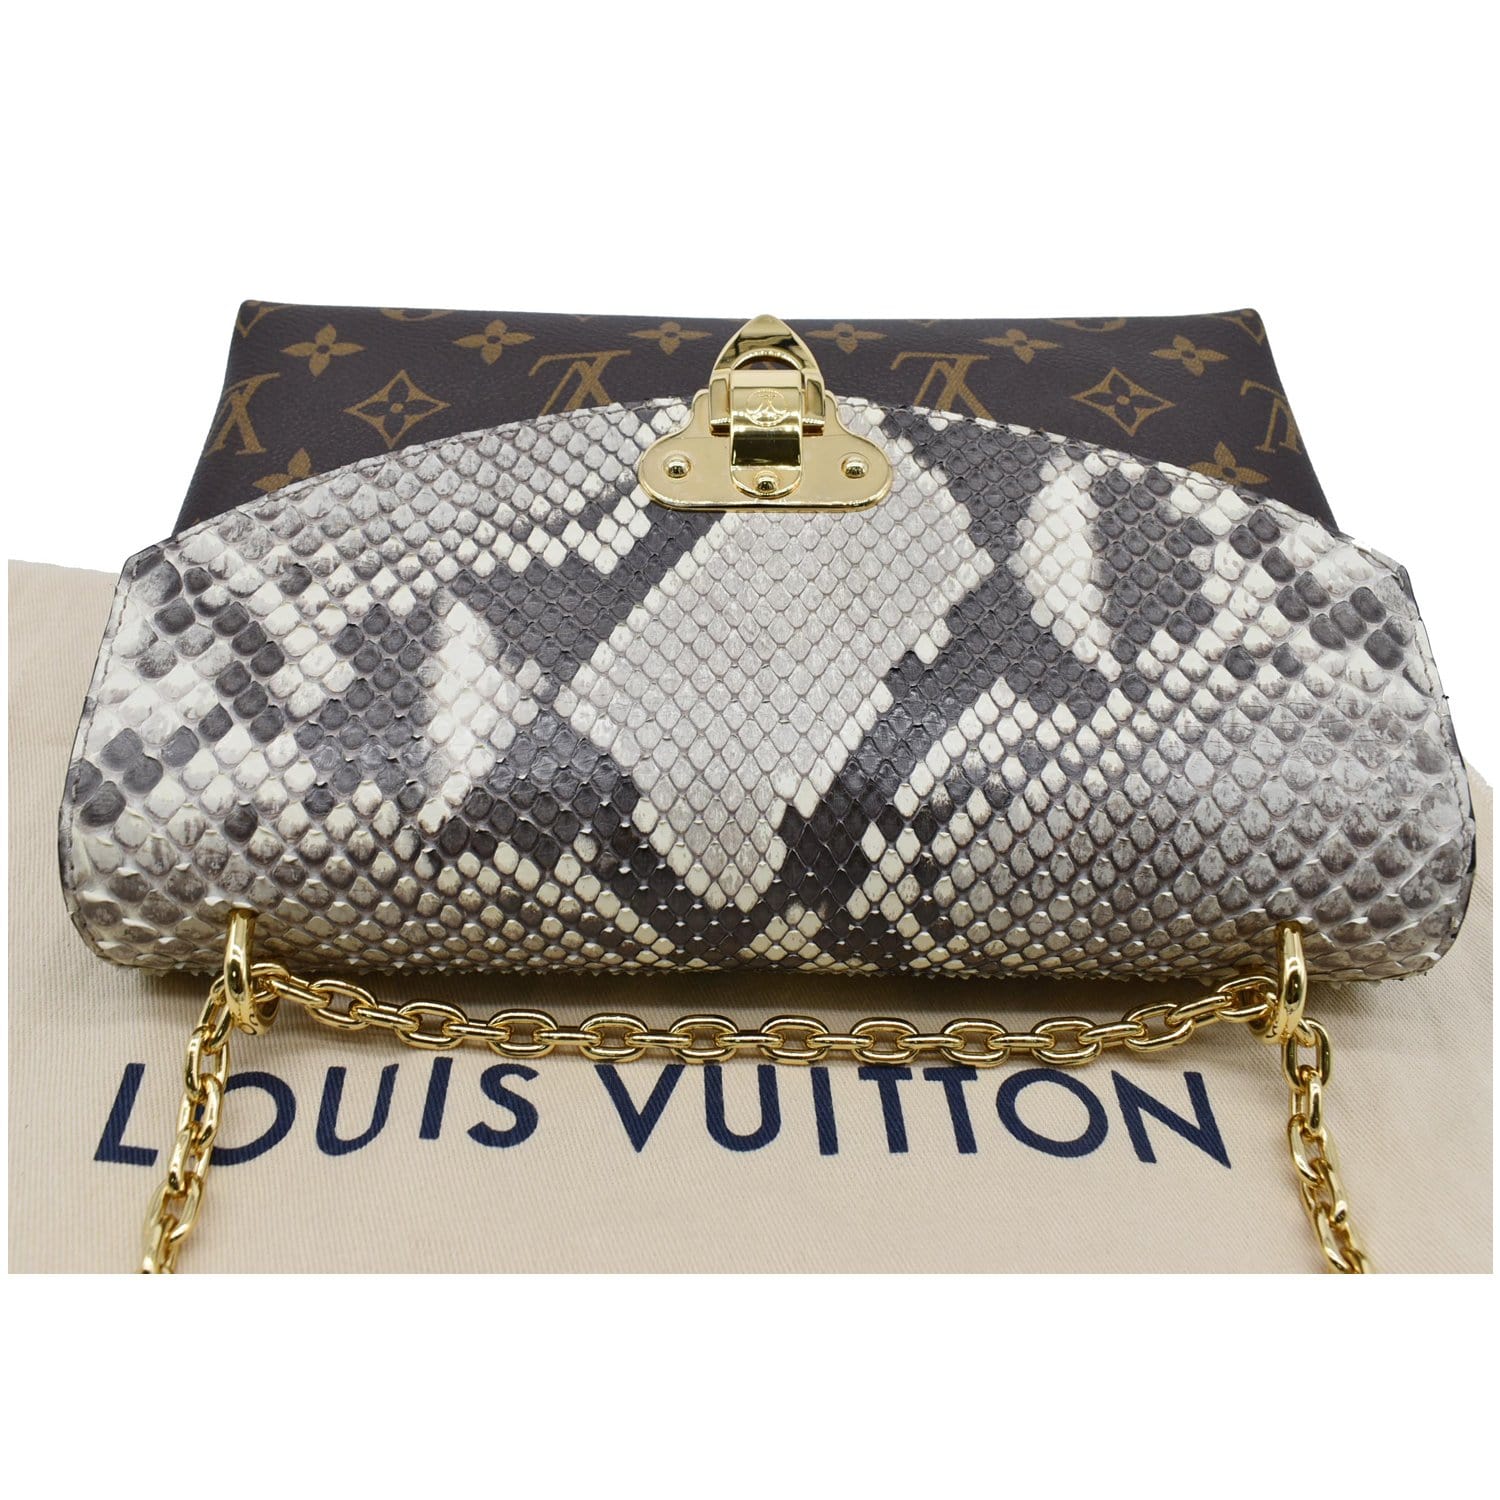 Saint placide python handbag Louis Vuitton Brown in Python - 27993733